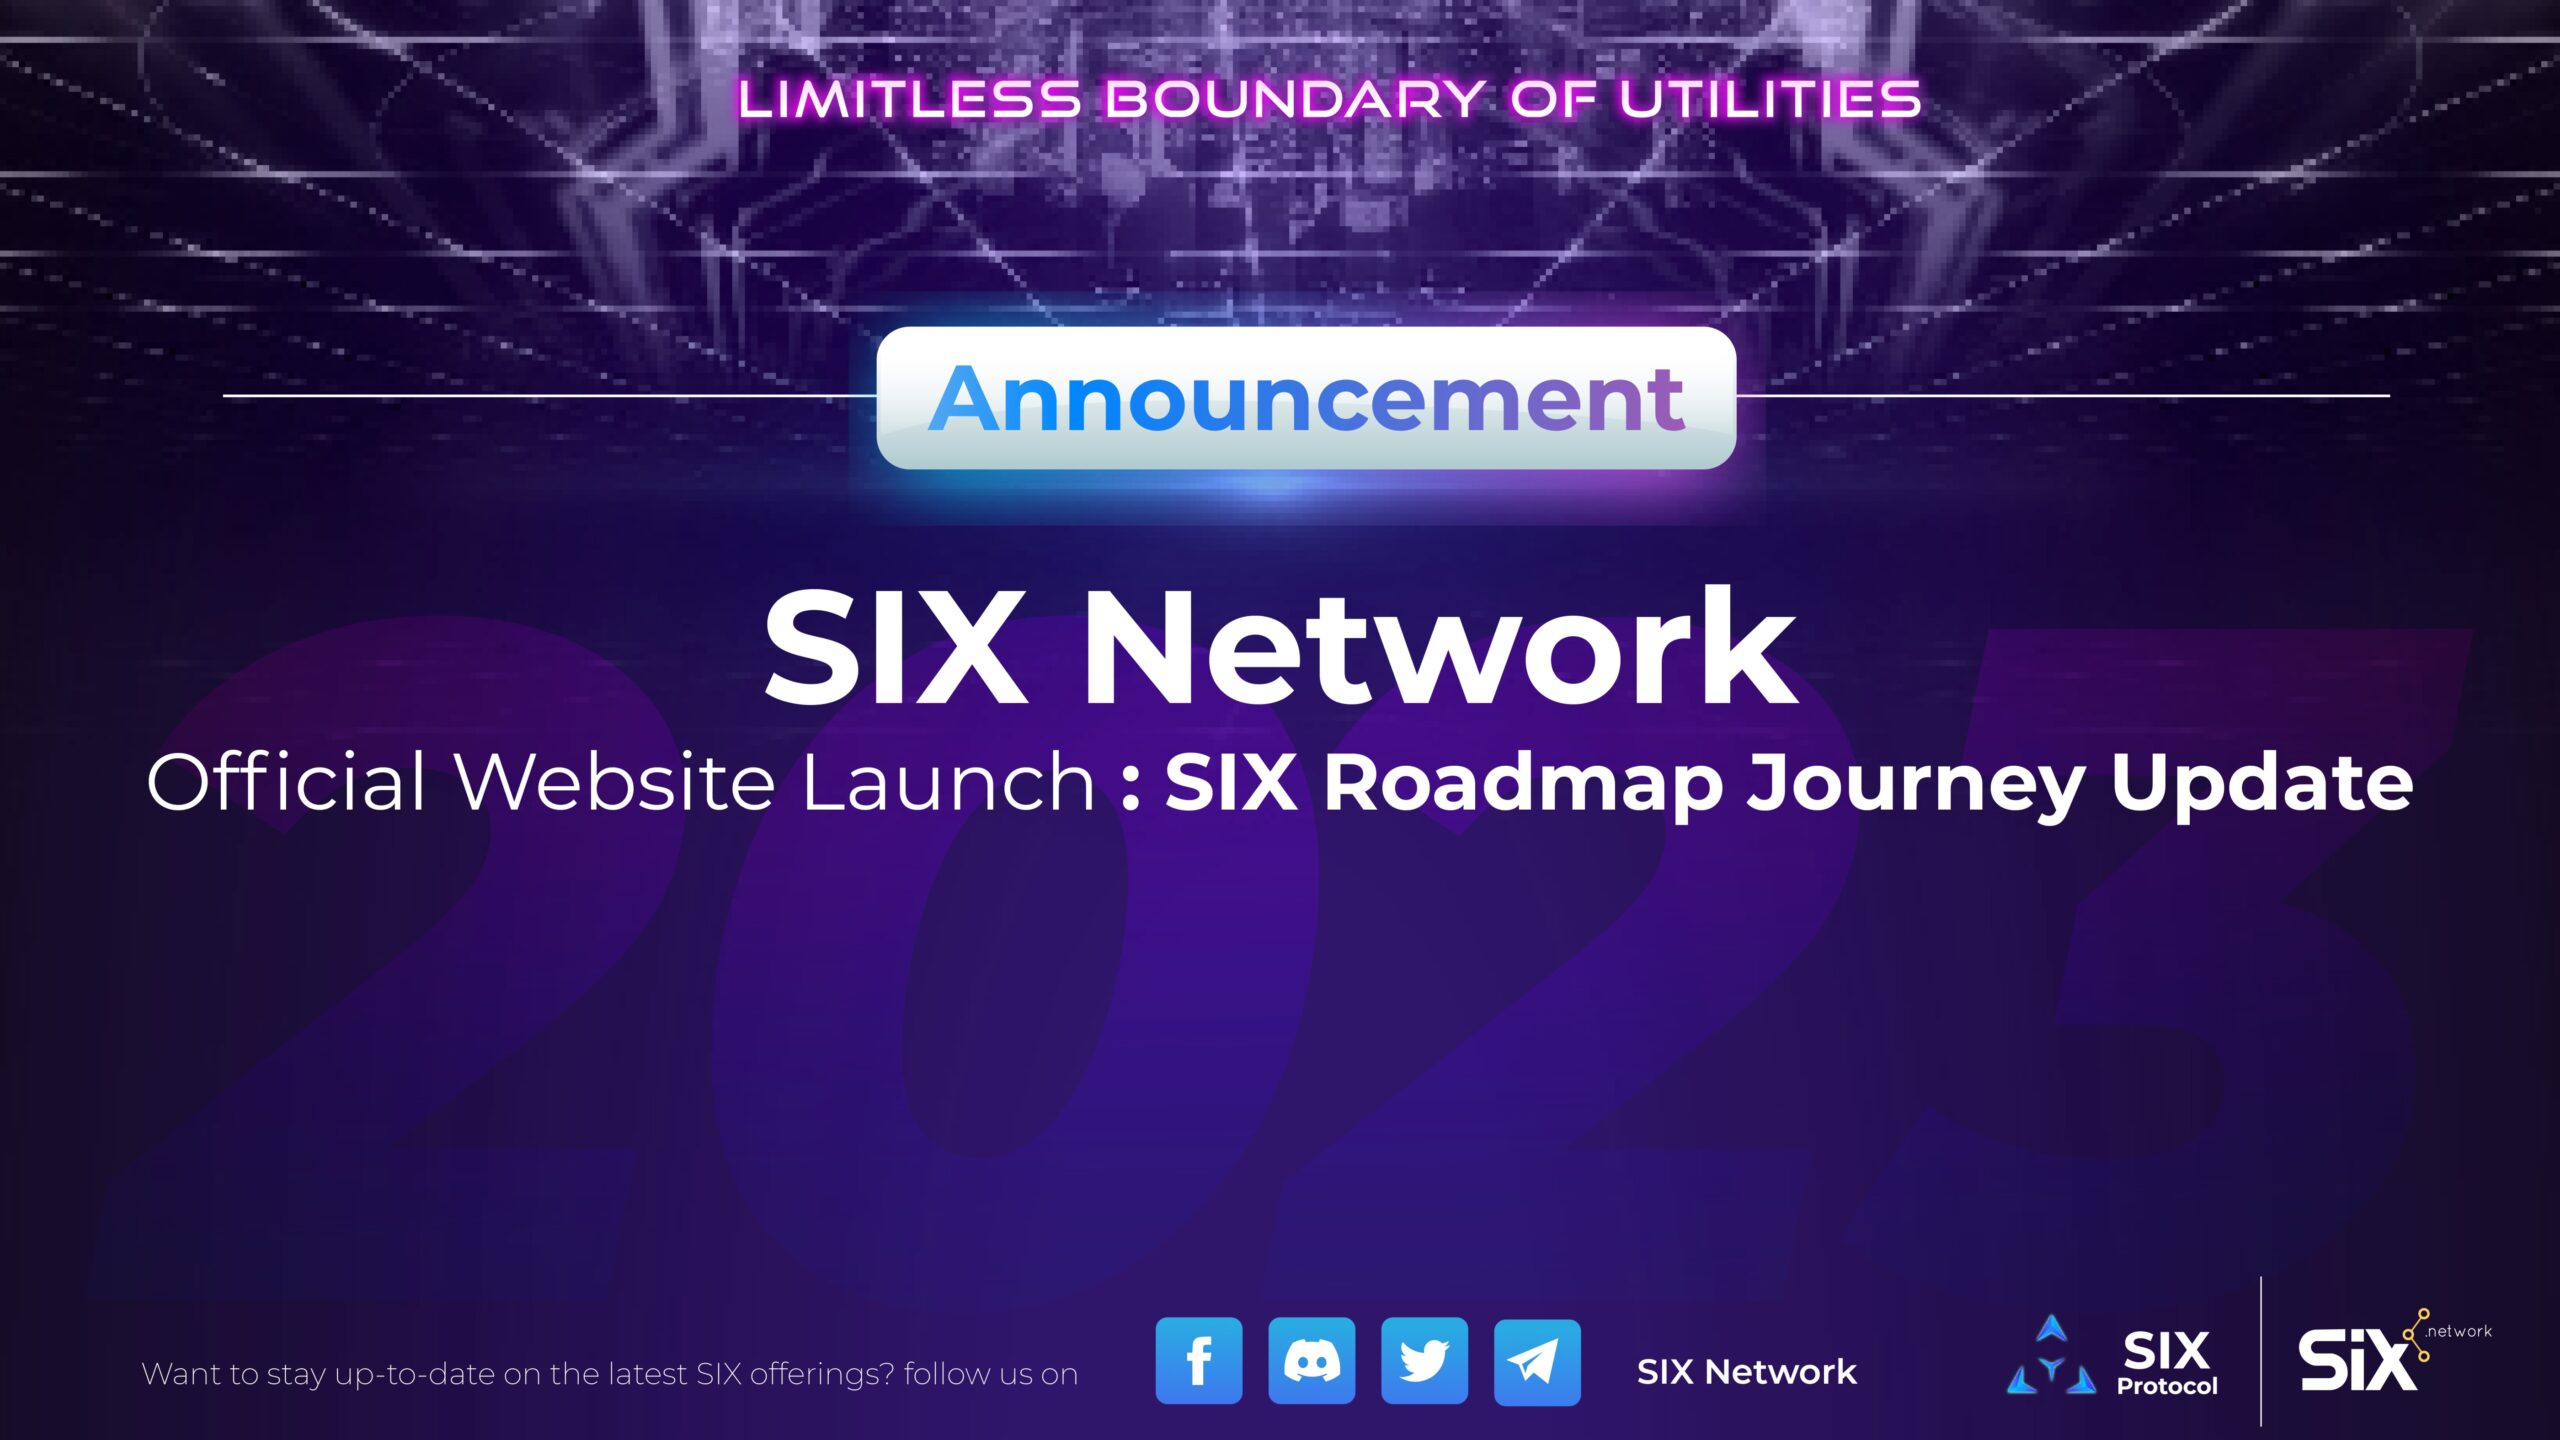 SIX Network’s Website Launch “SIX Roadmap Journey Update”